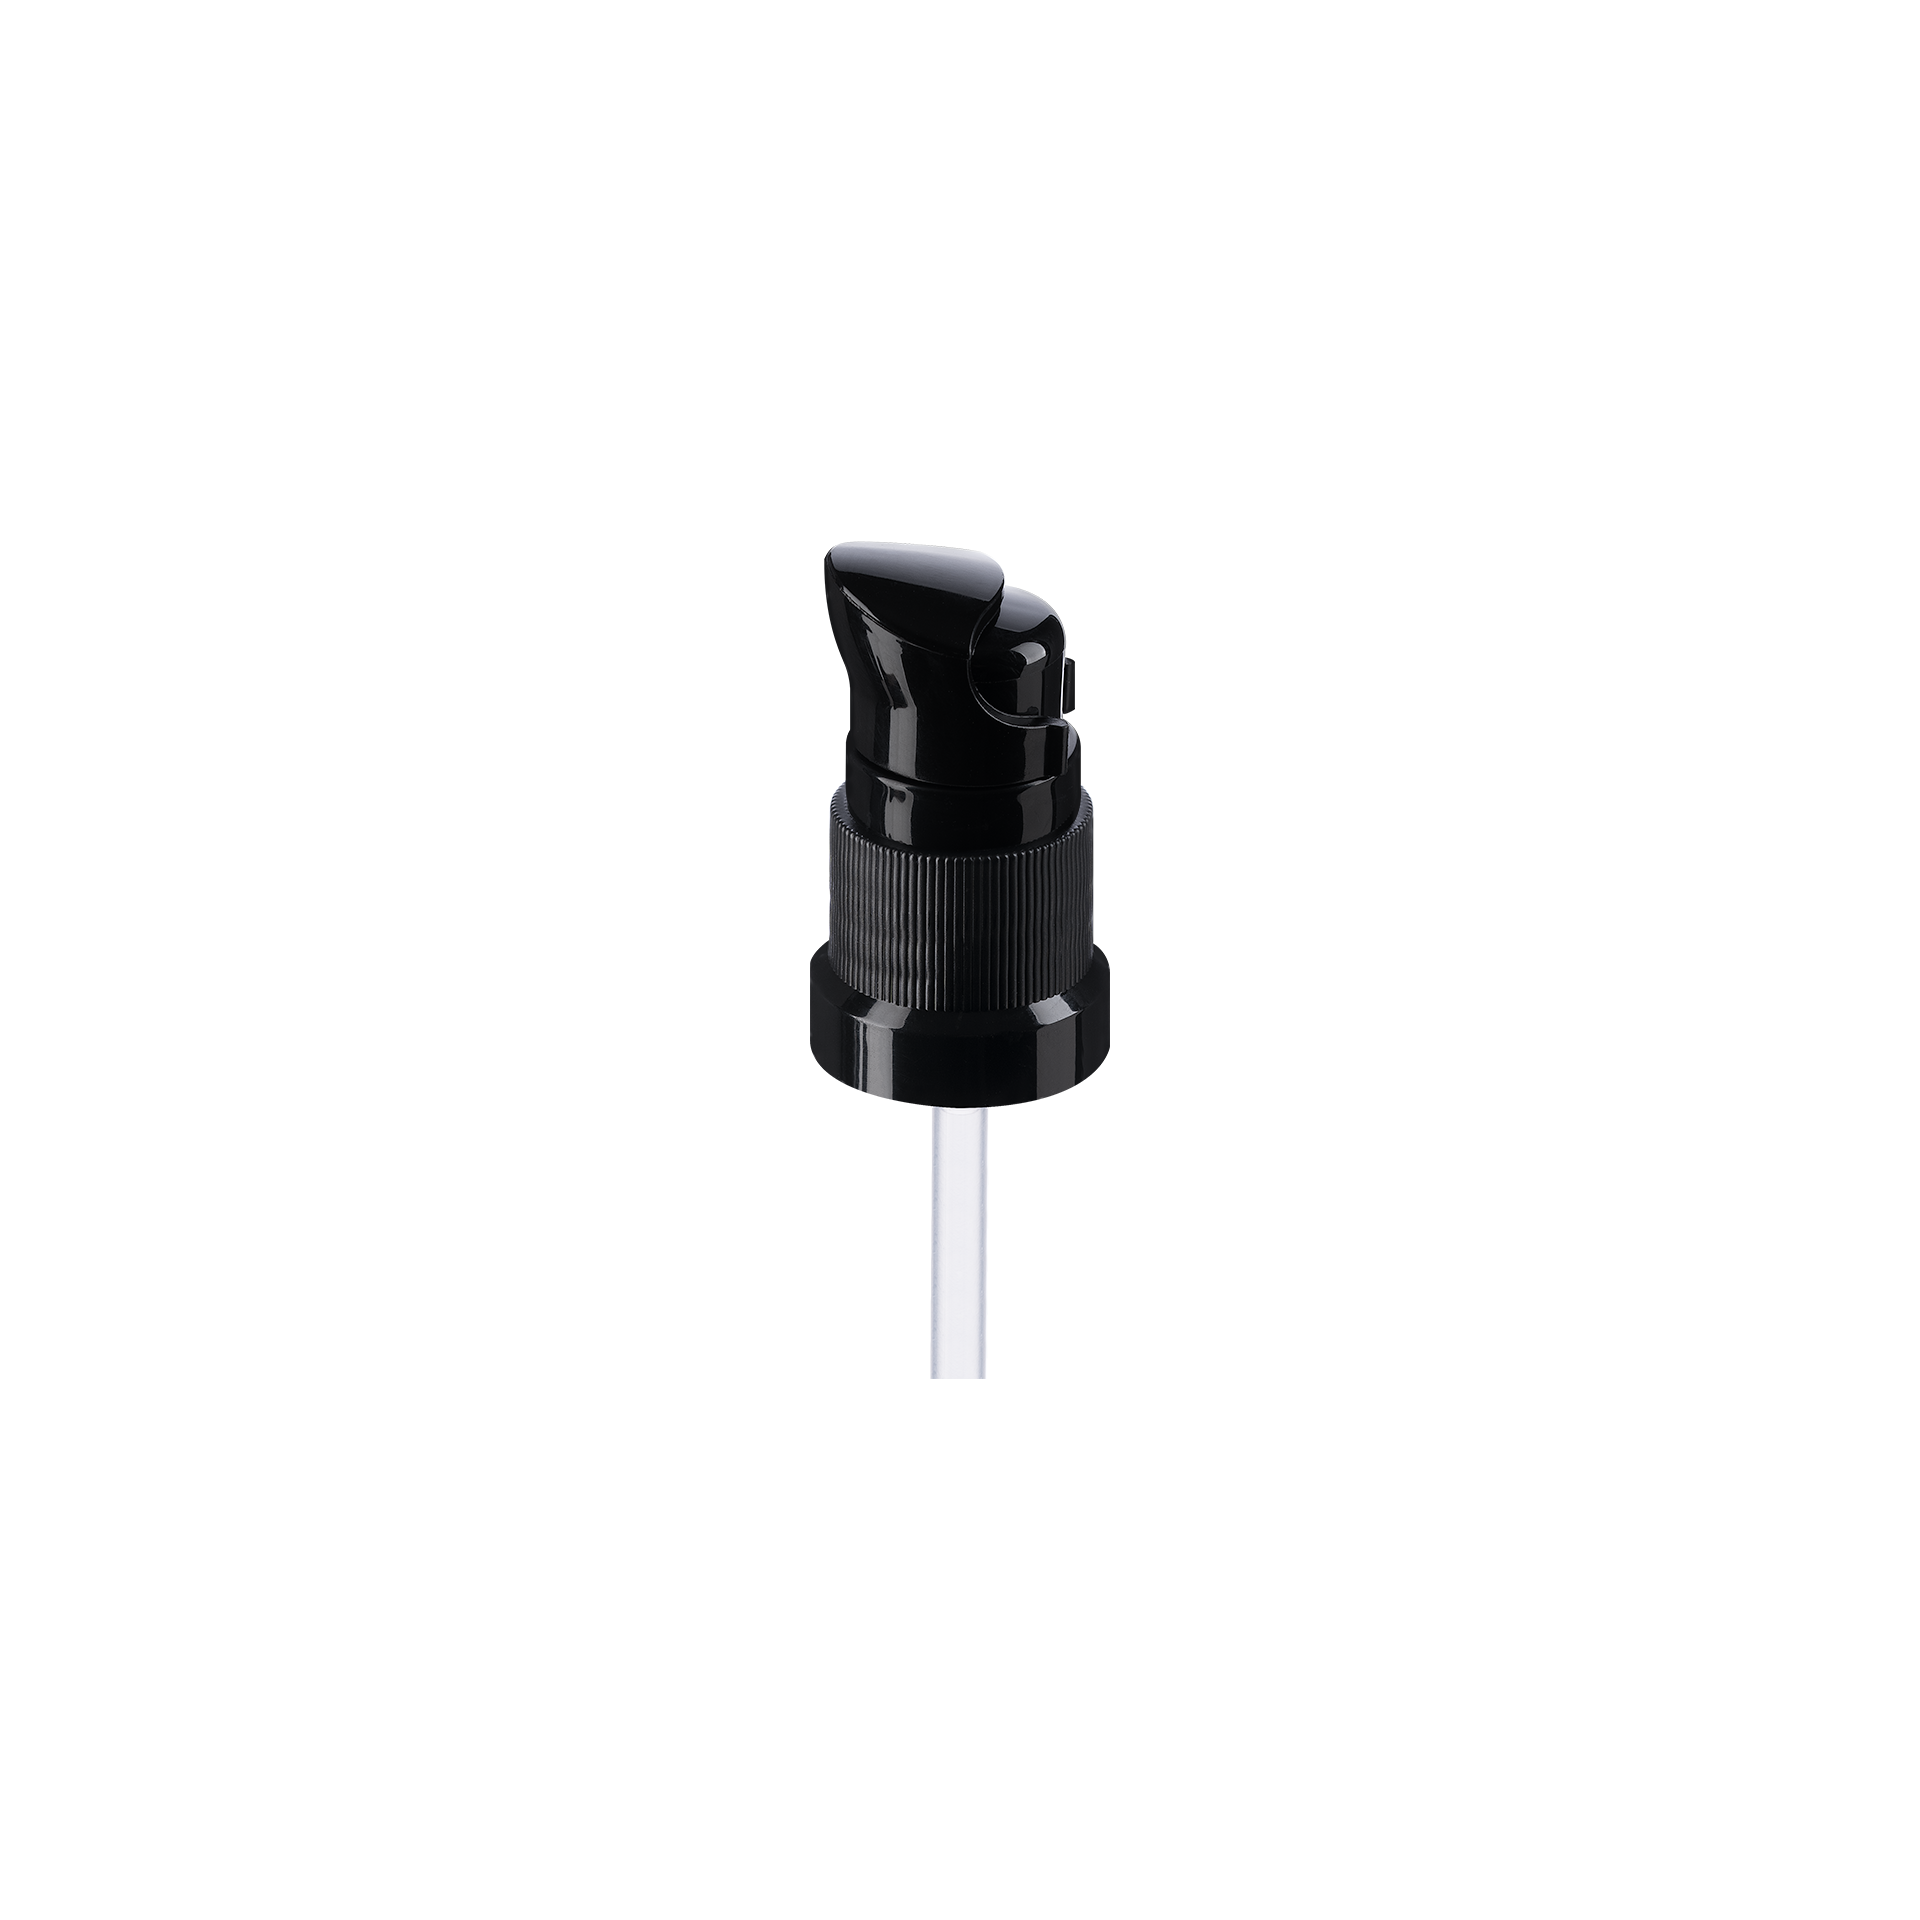 Lotion pump Metropolitan DIN18, PP, black, dose 0.15ml, black security clip (Ginger 100)